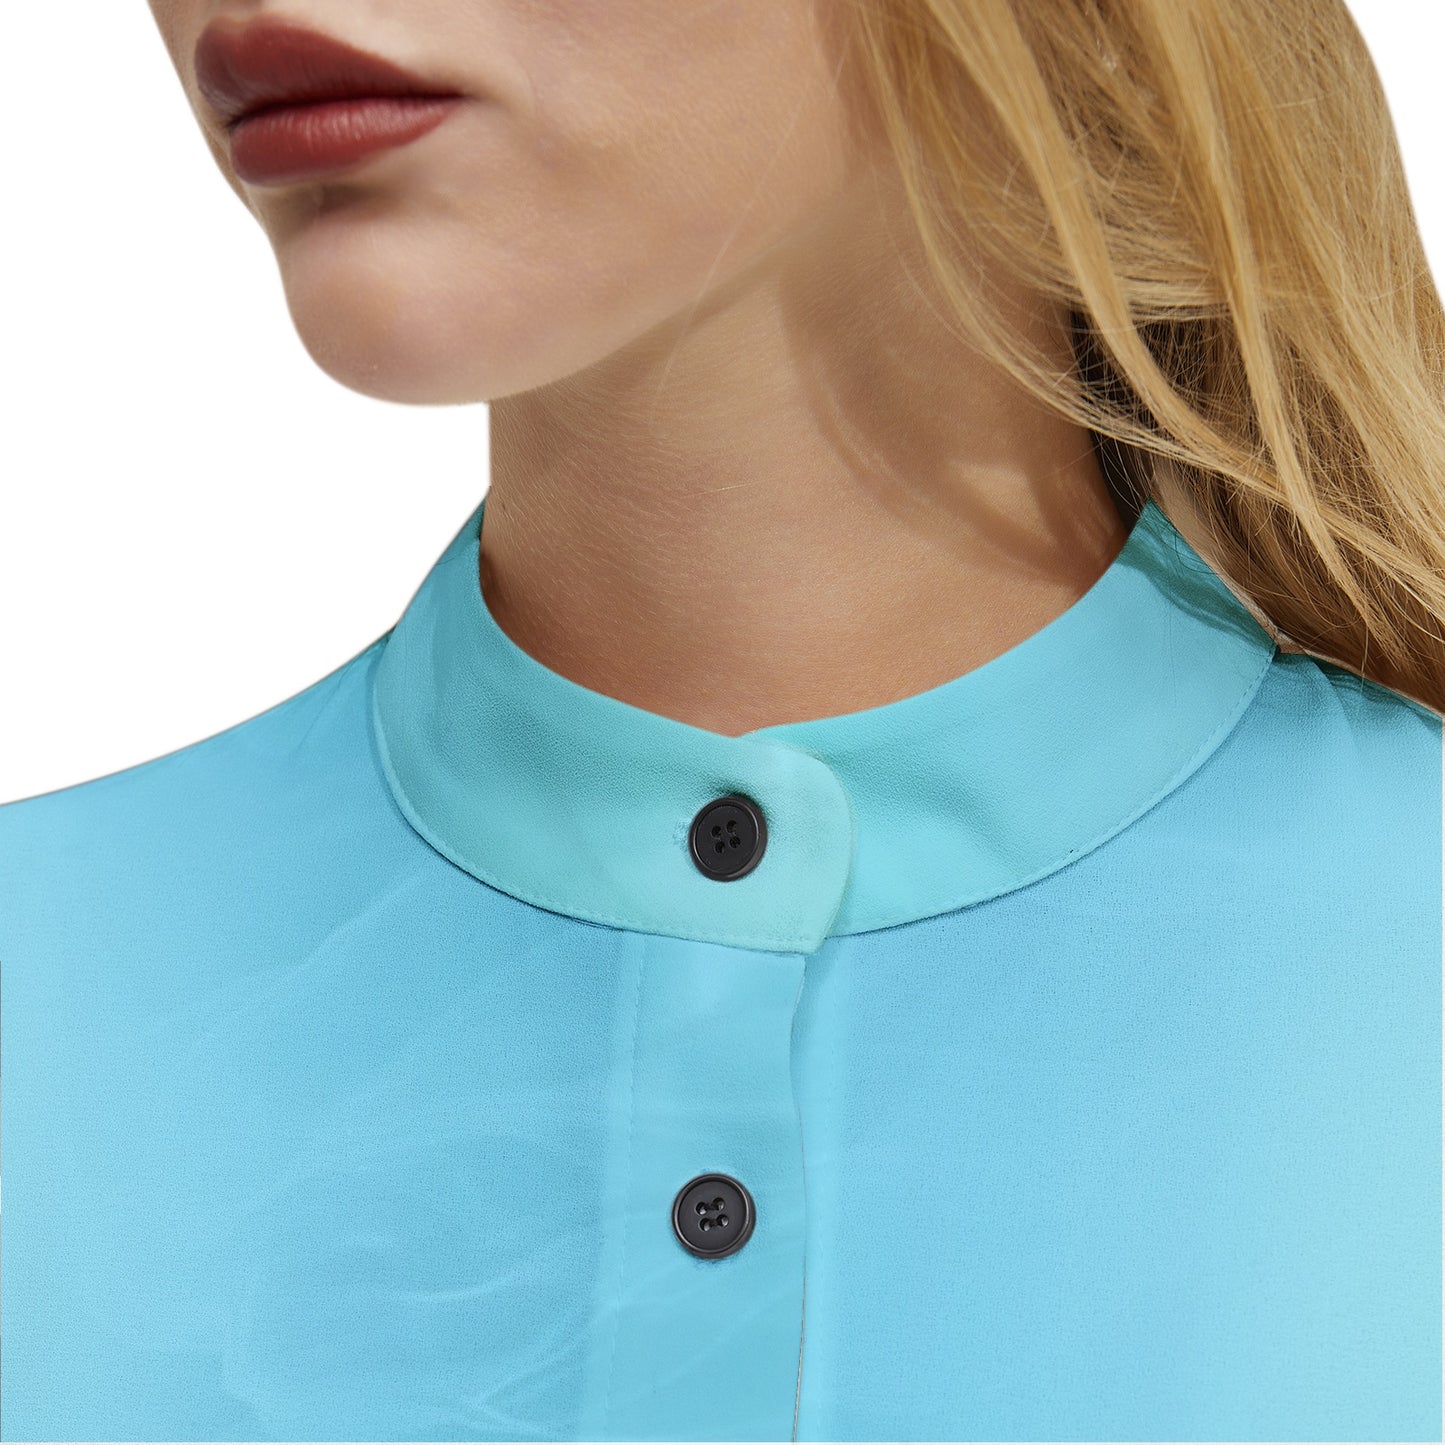 Neduz Elements Flow Aquatic Smoke Long Sleeve Button Up Casual Shirt Top